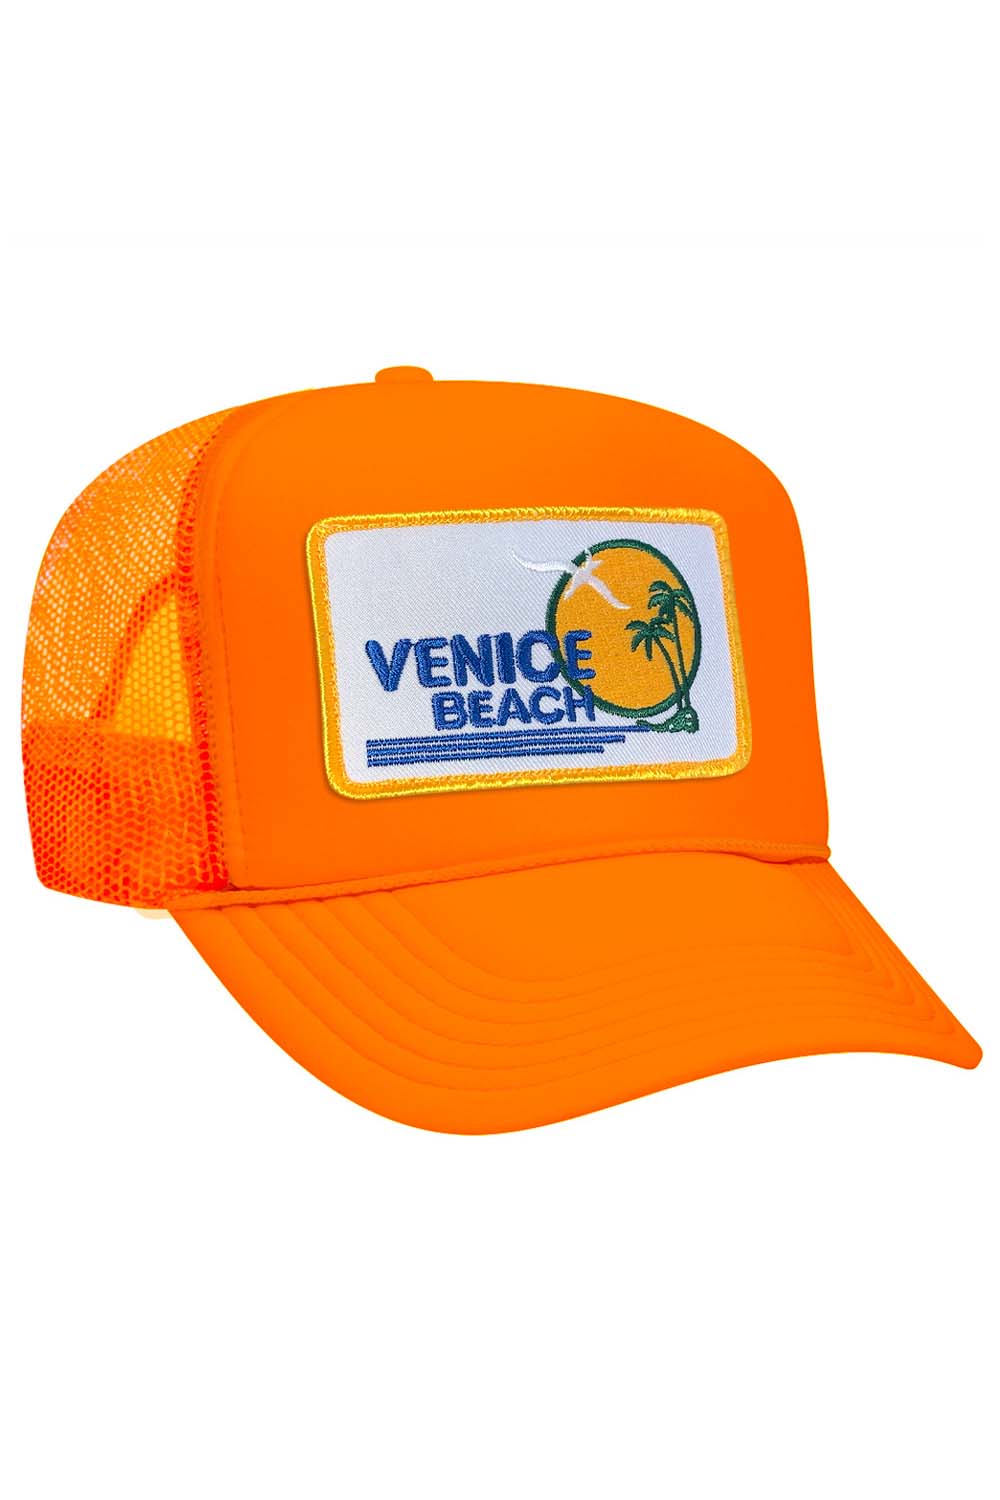 VENICE BEACH VINTAGE TRUCKER HAT HATS Aviator Nation OS NEON ORANGE 